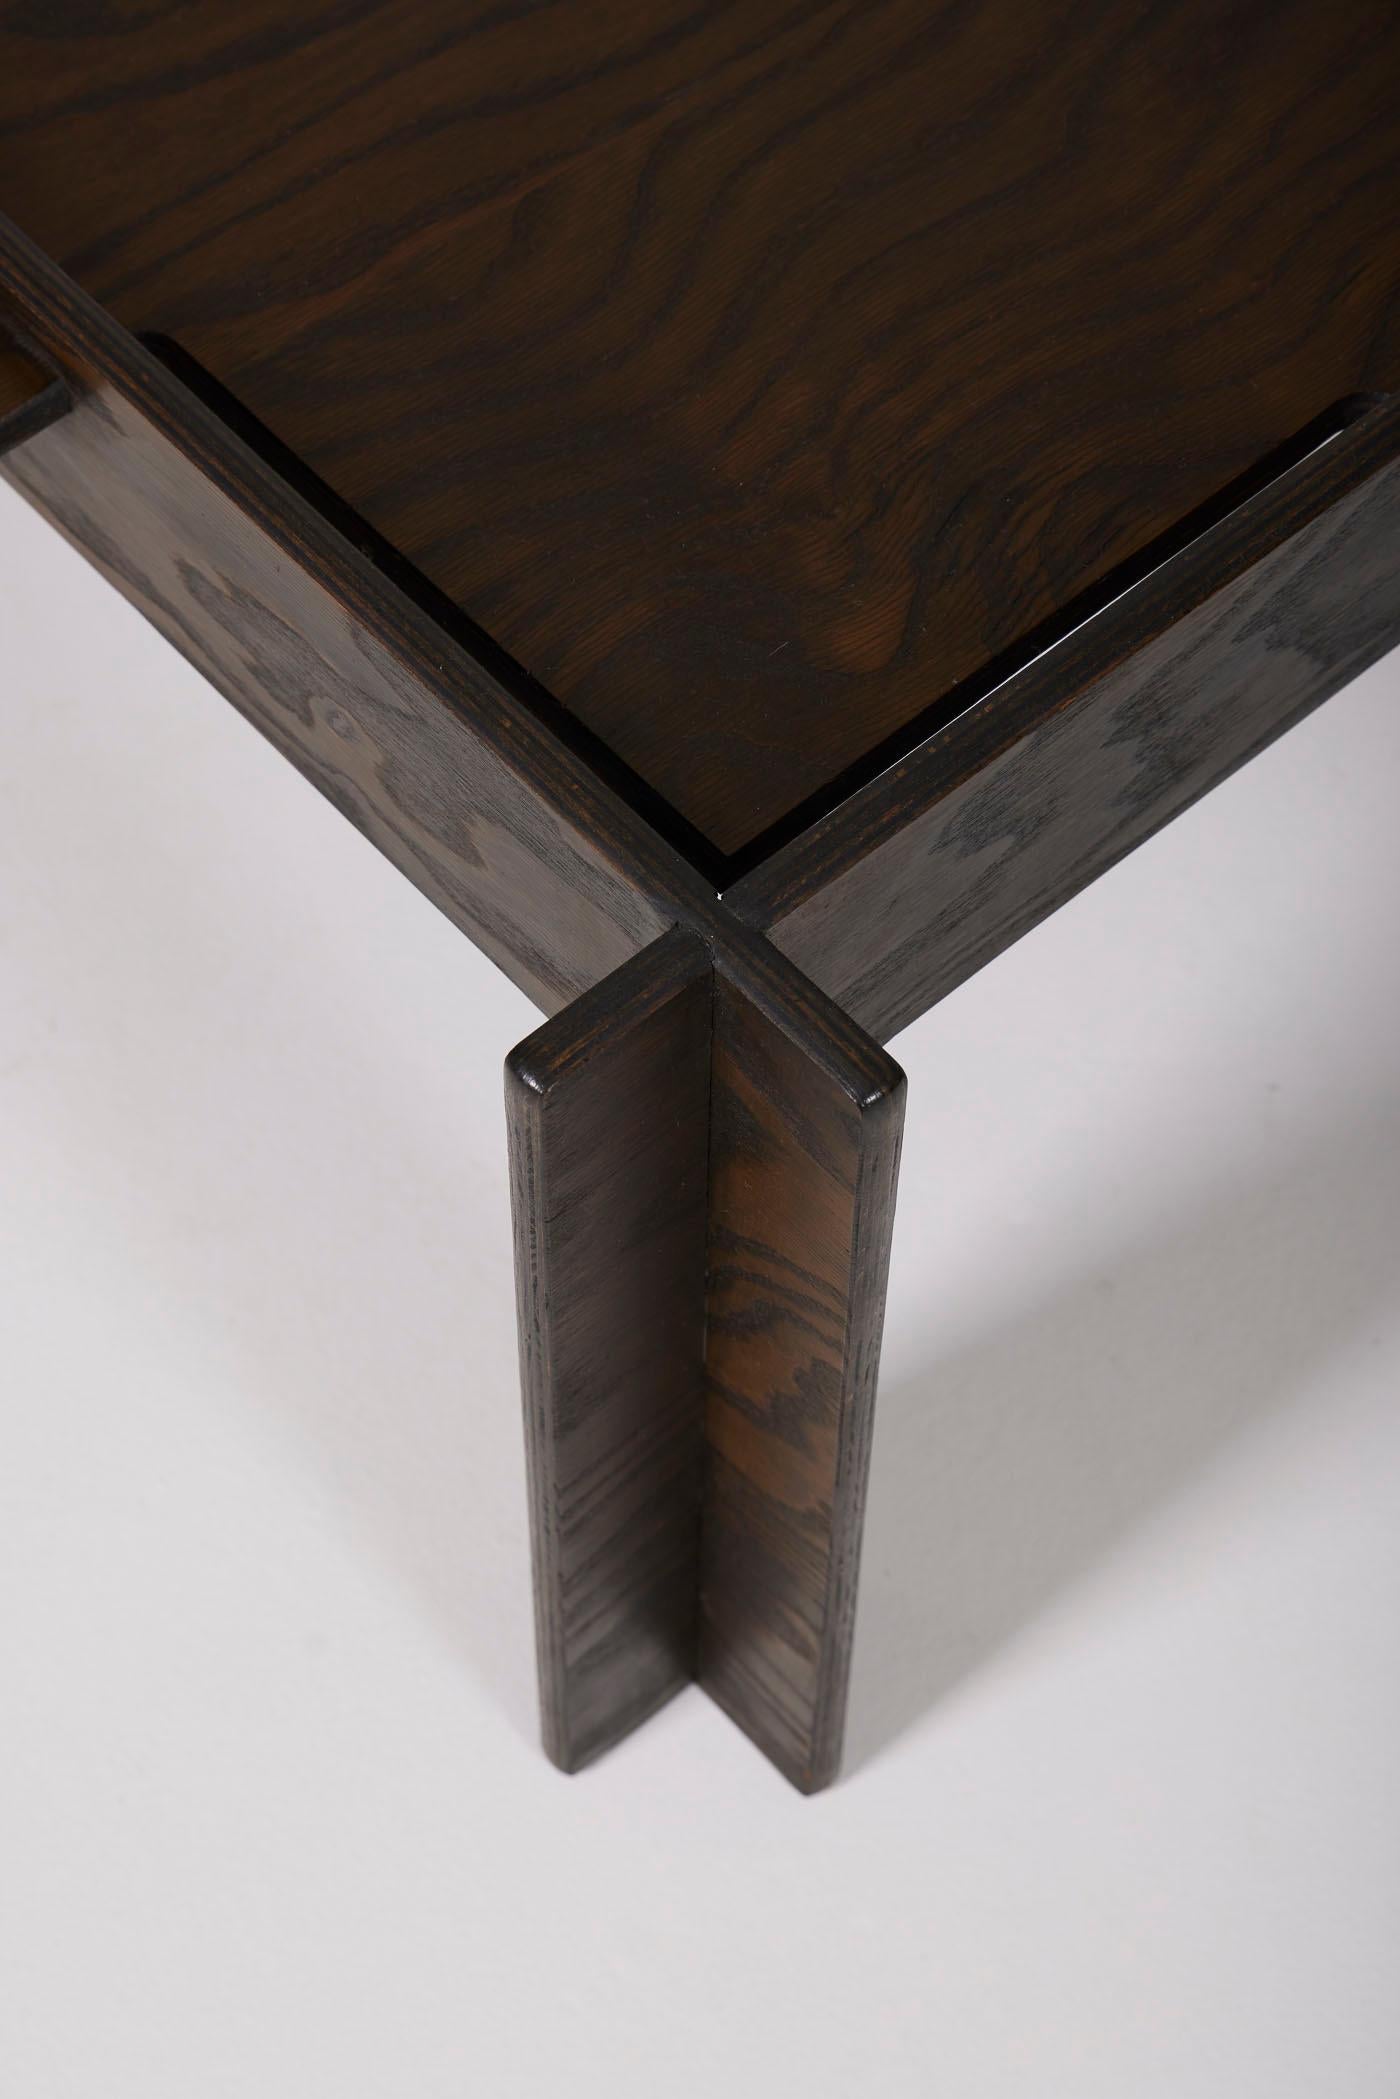 20th Century Arne Jacobsen coffee table